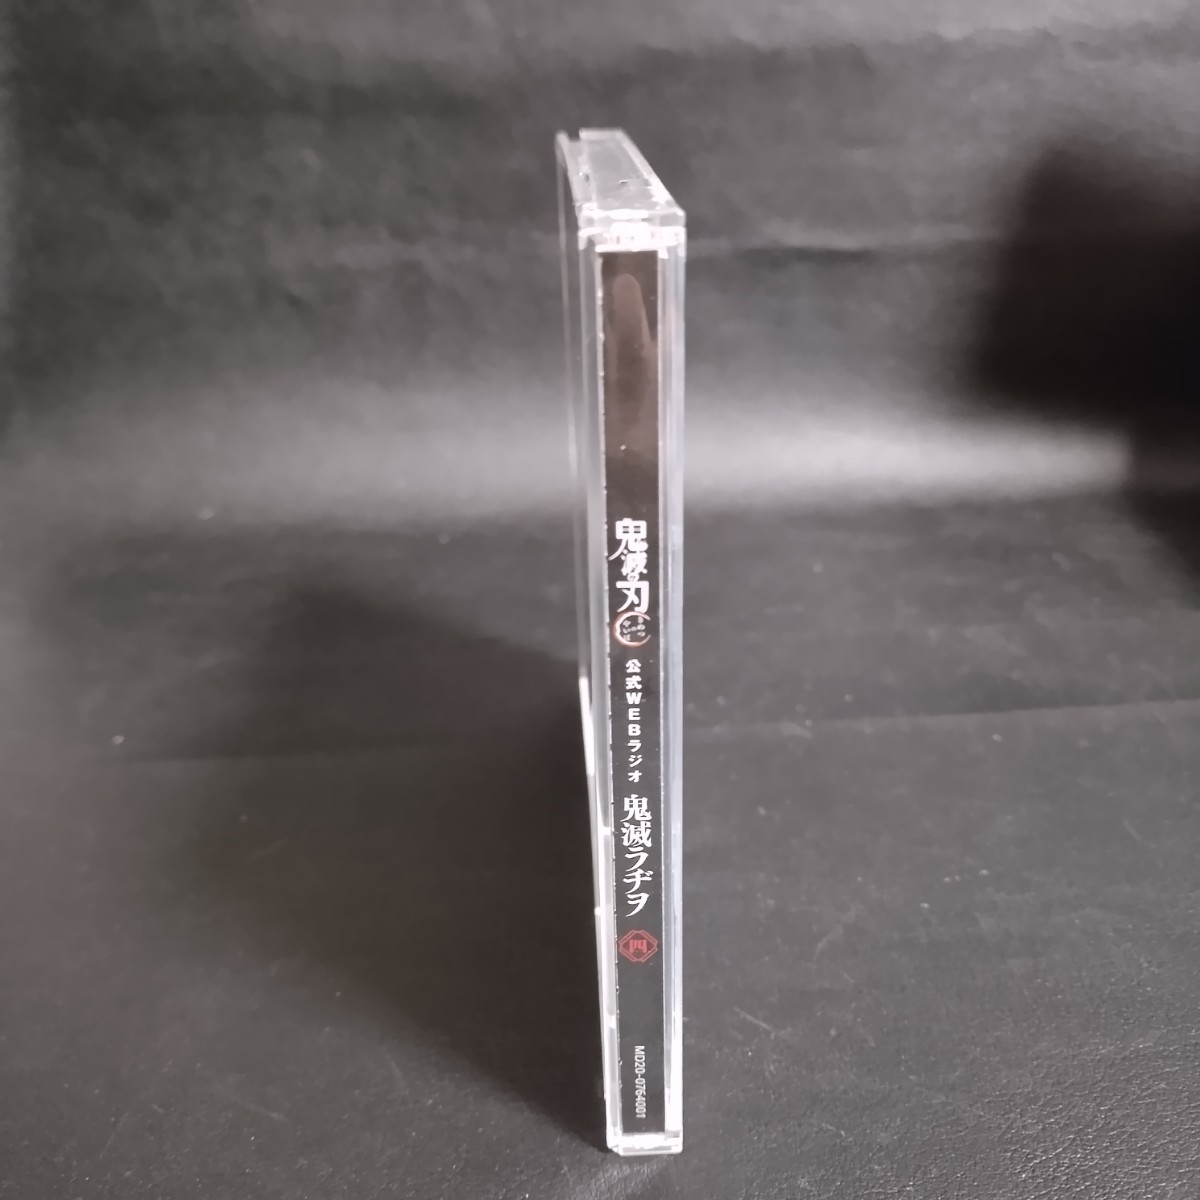 [... лезвие ] радио CD[..laji.] no. 4 шт CD 2 листов комплект звук Izumi 